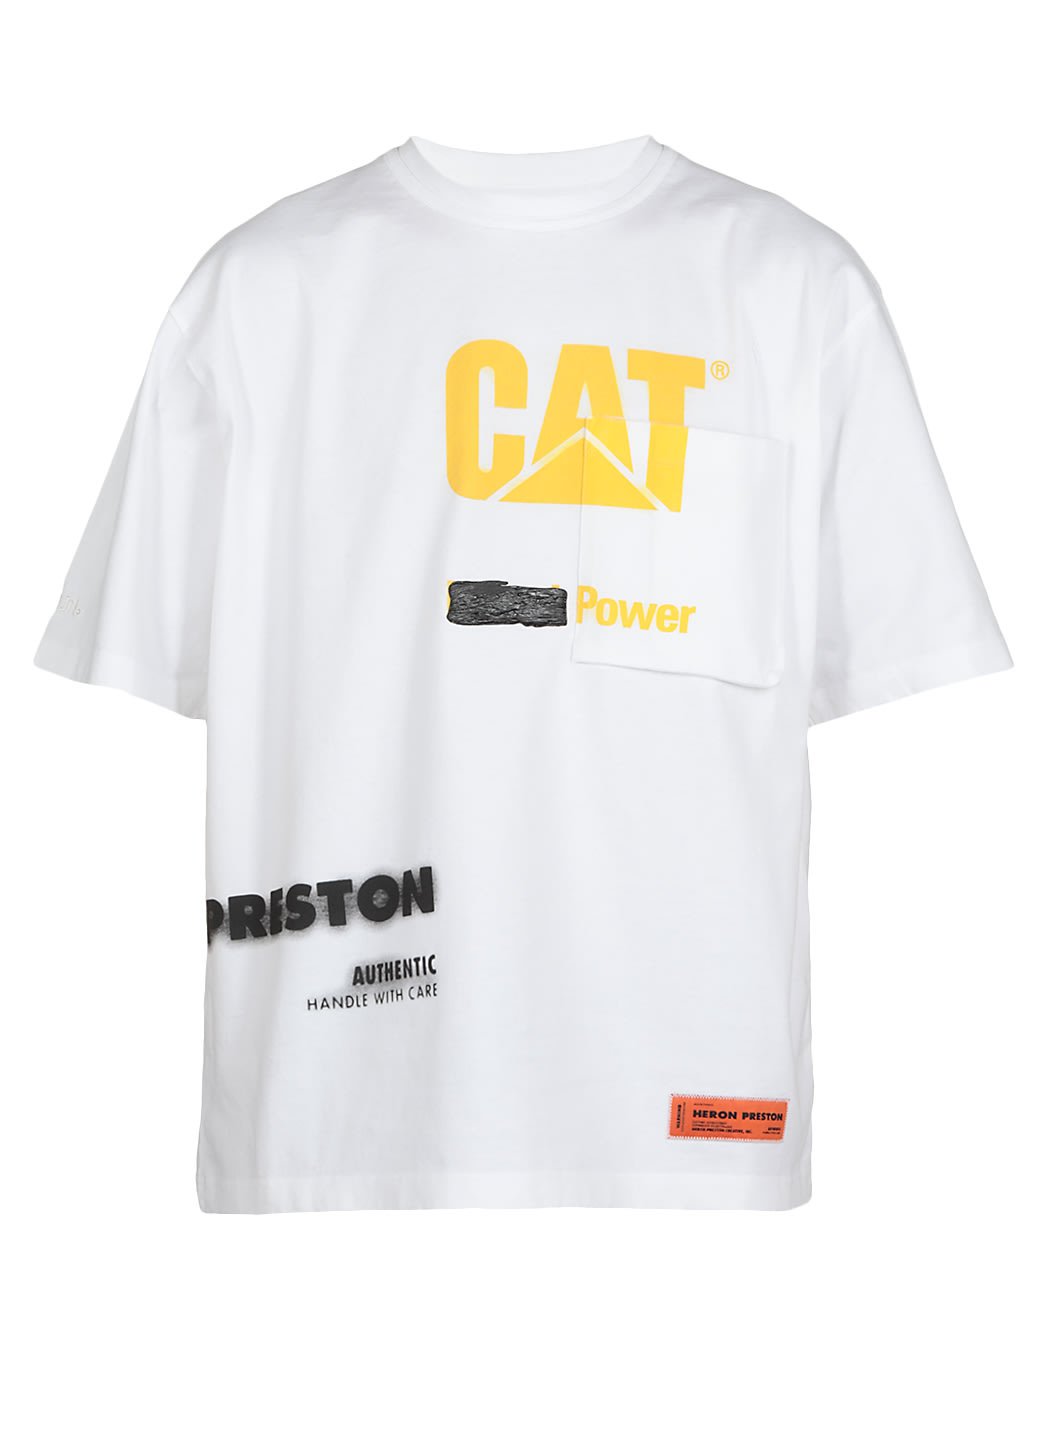 HERON PRESTON Cat Pkt Power T-shirt